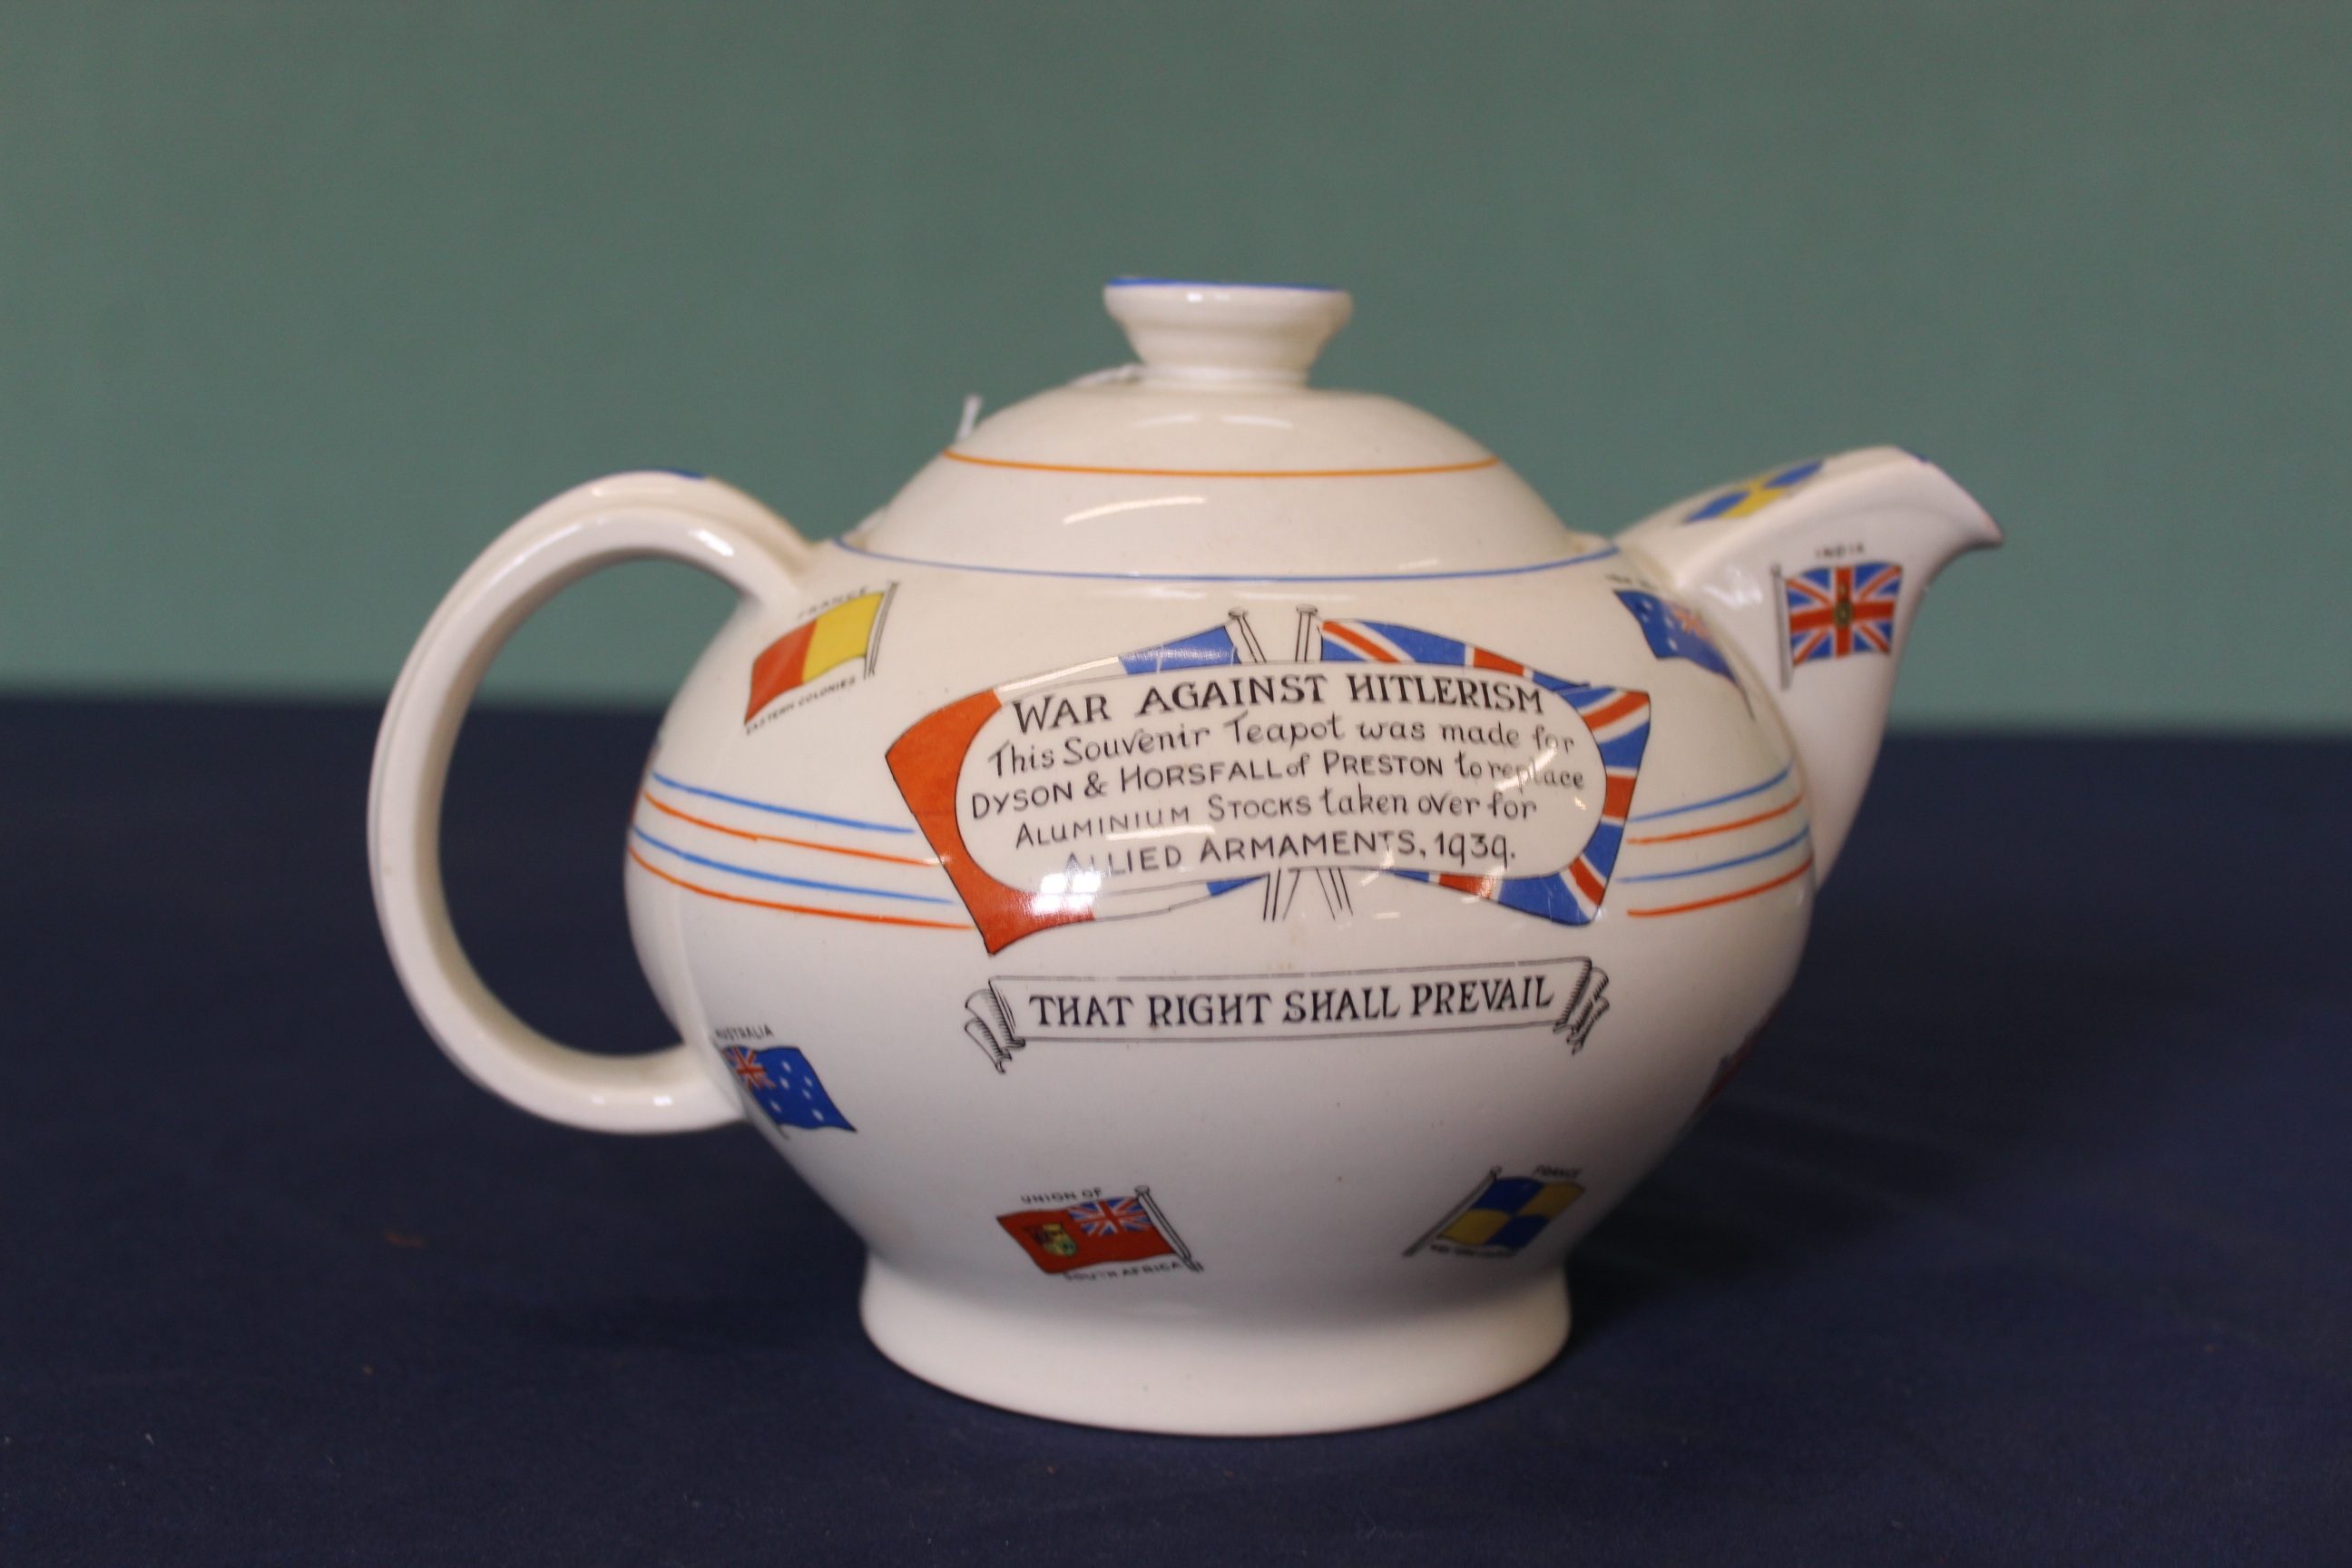 A 'War against Hitlerism' ceramic teapot by Ducal